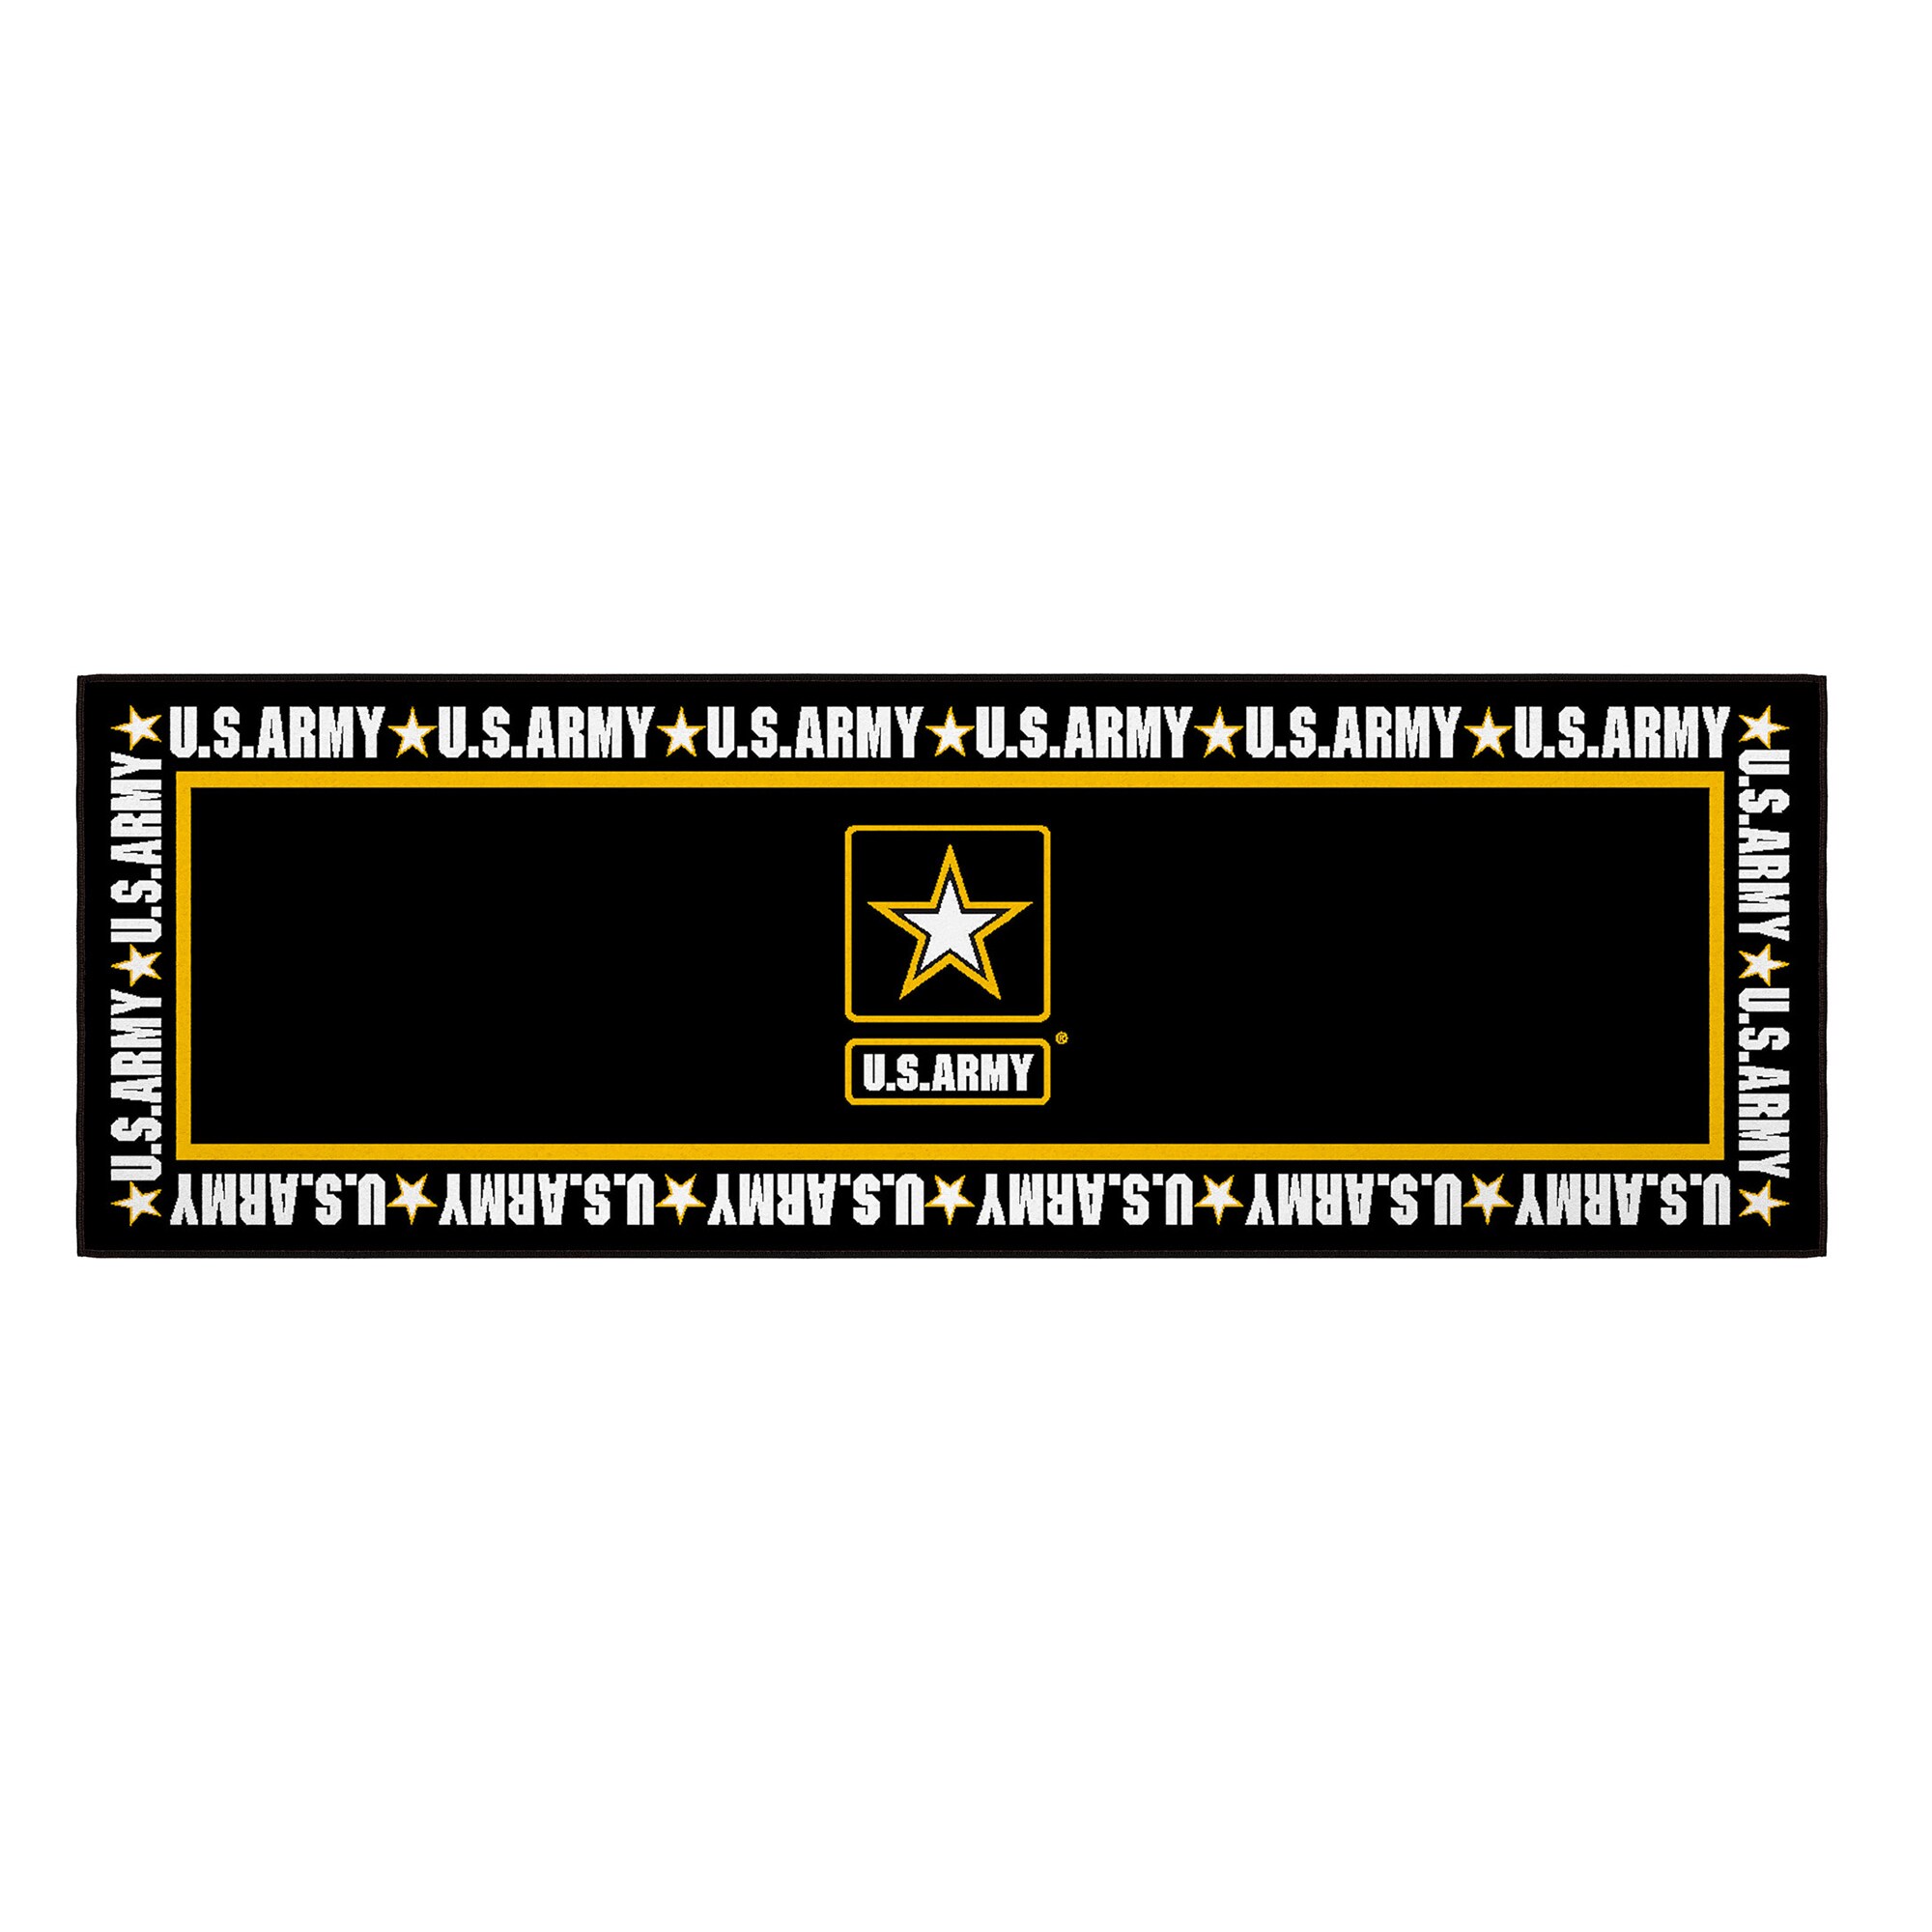 Ottomanson US Army Border Machine Washable Non-Slip Rubberback 2x5 Runner Rug, 20 inchx 59 inch, Black/Yellow, Size: 20 inch x 59 inch